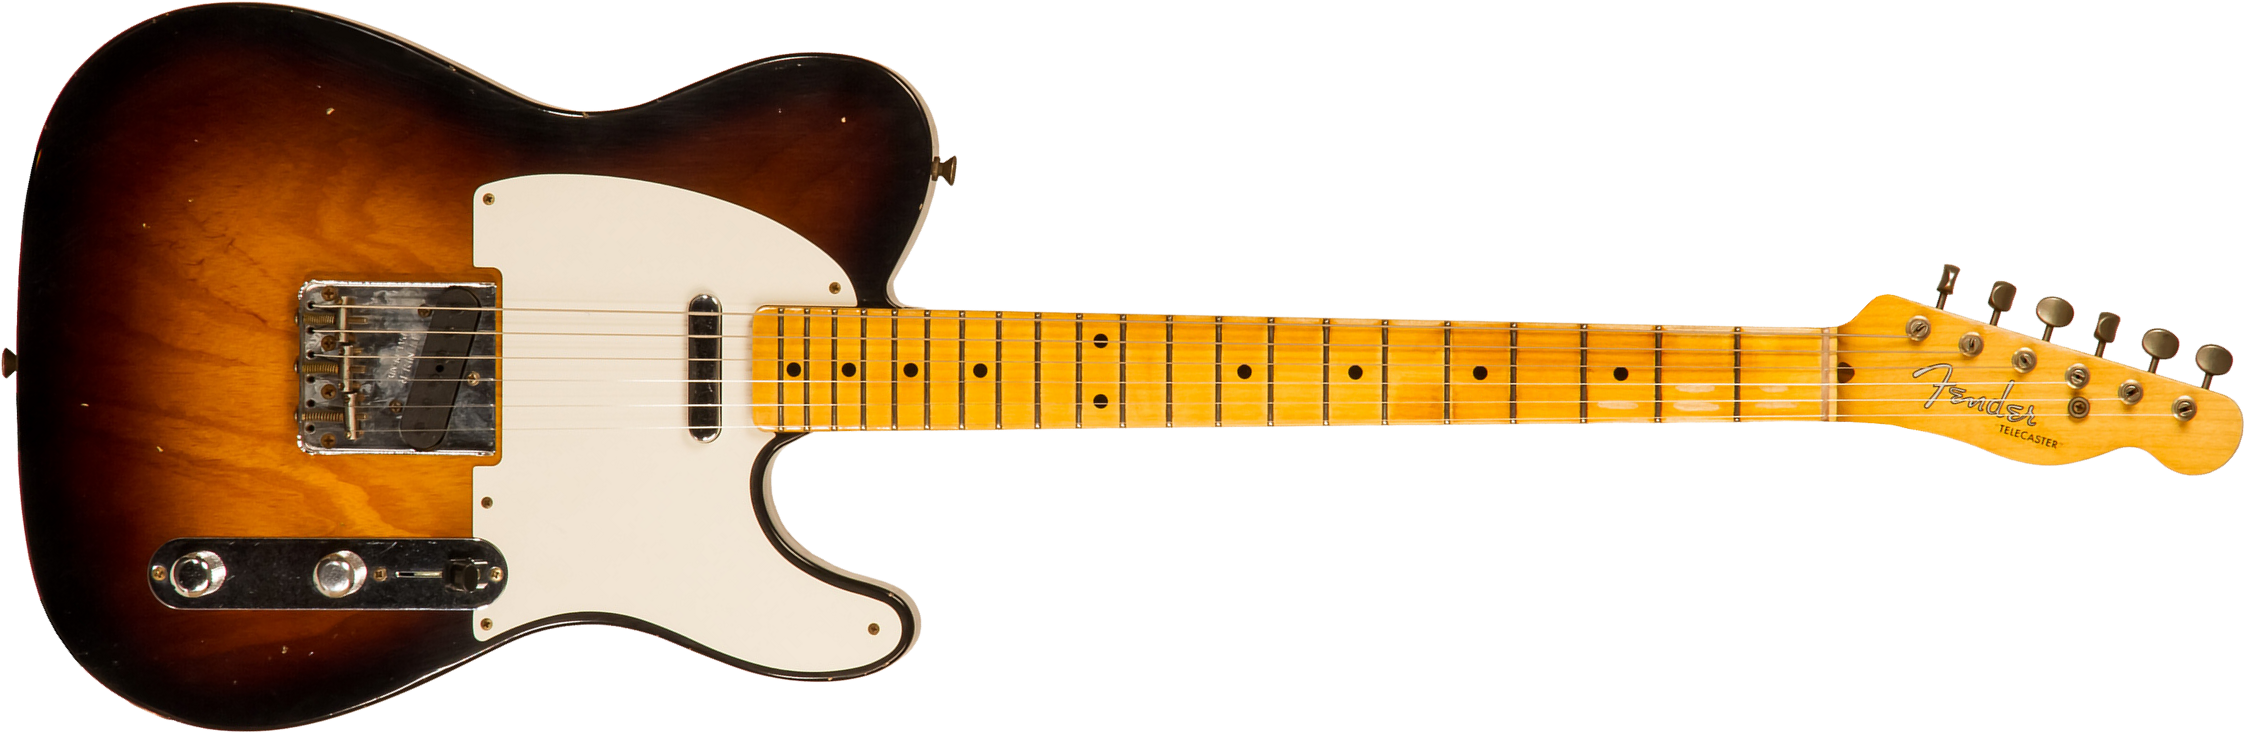 Fender Custom Shop Tele 1955 Ltd 2s Ht Mn #cz560649 - Relic Wide Fade 2-color Sunburst - Guitarra eléctrica con forma de tel - Main picture